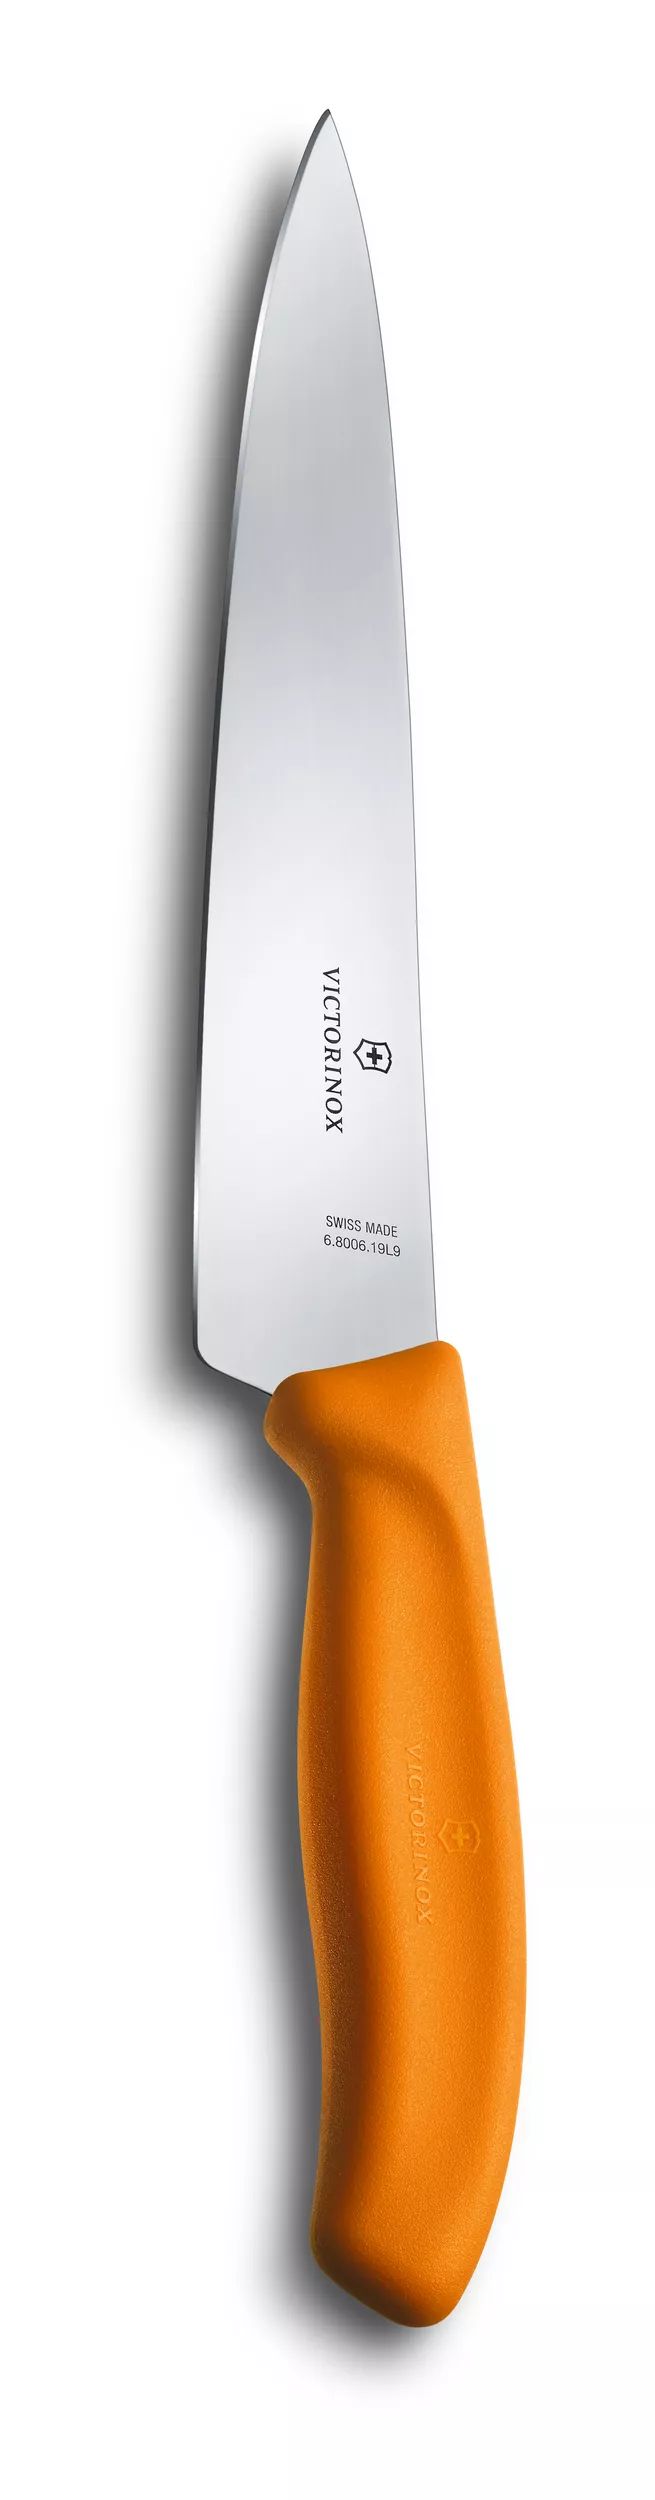 Cuchillo para chef Swiss Classic - 6.8006.19L9B